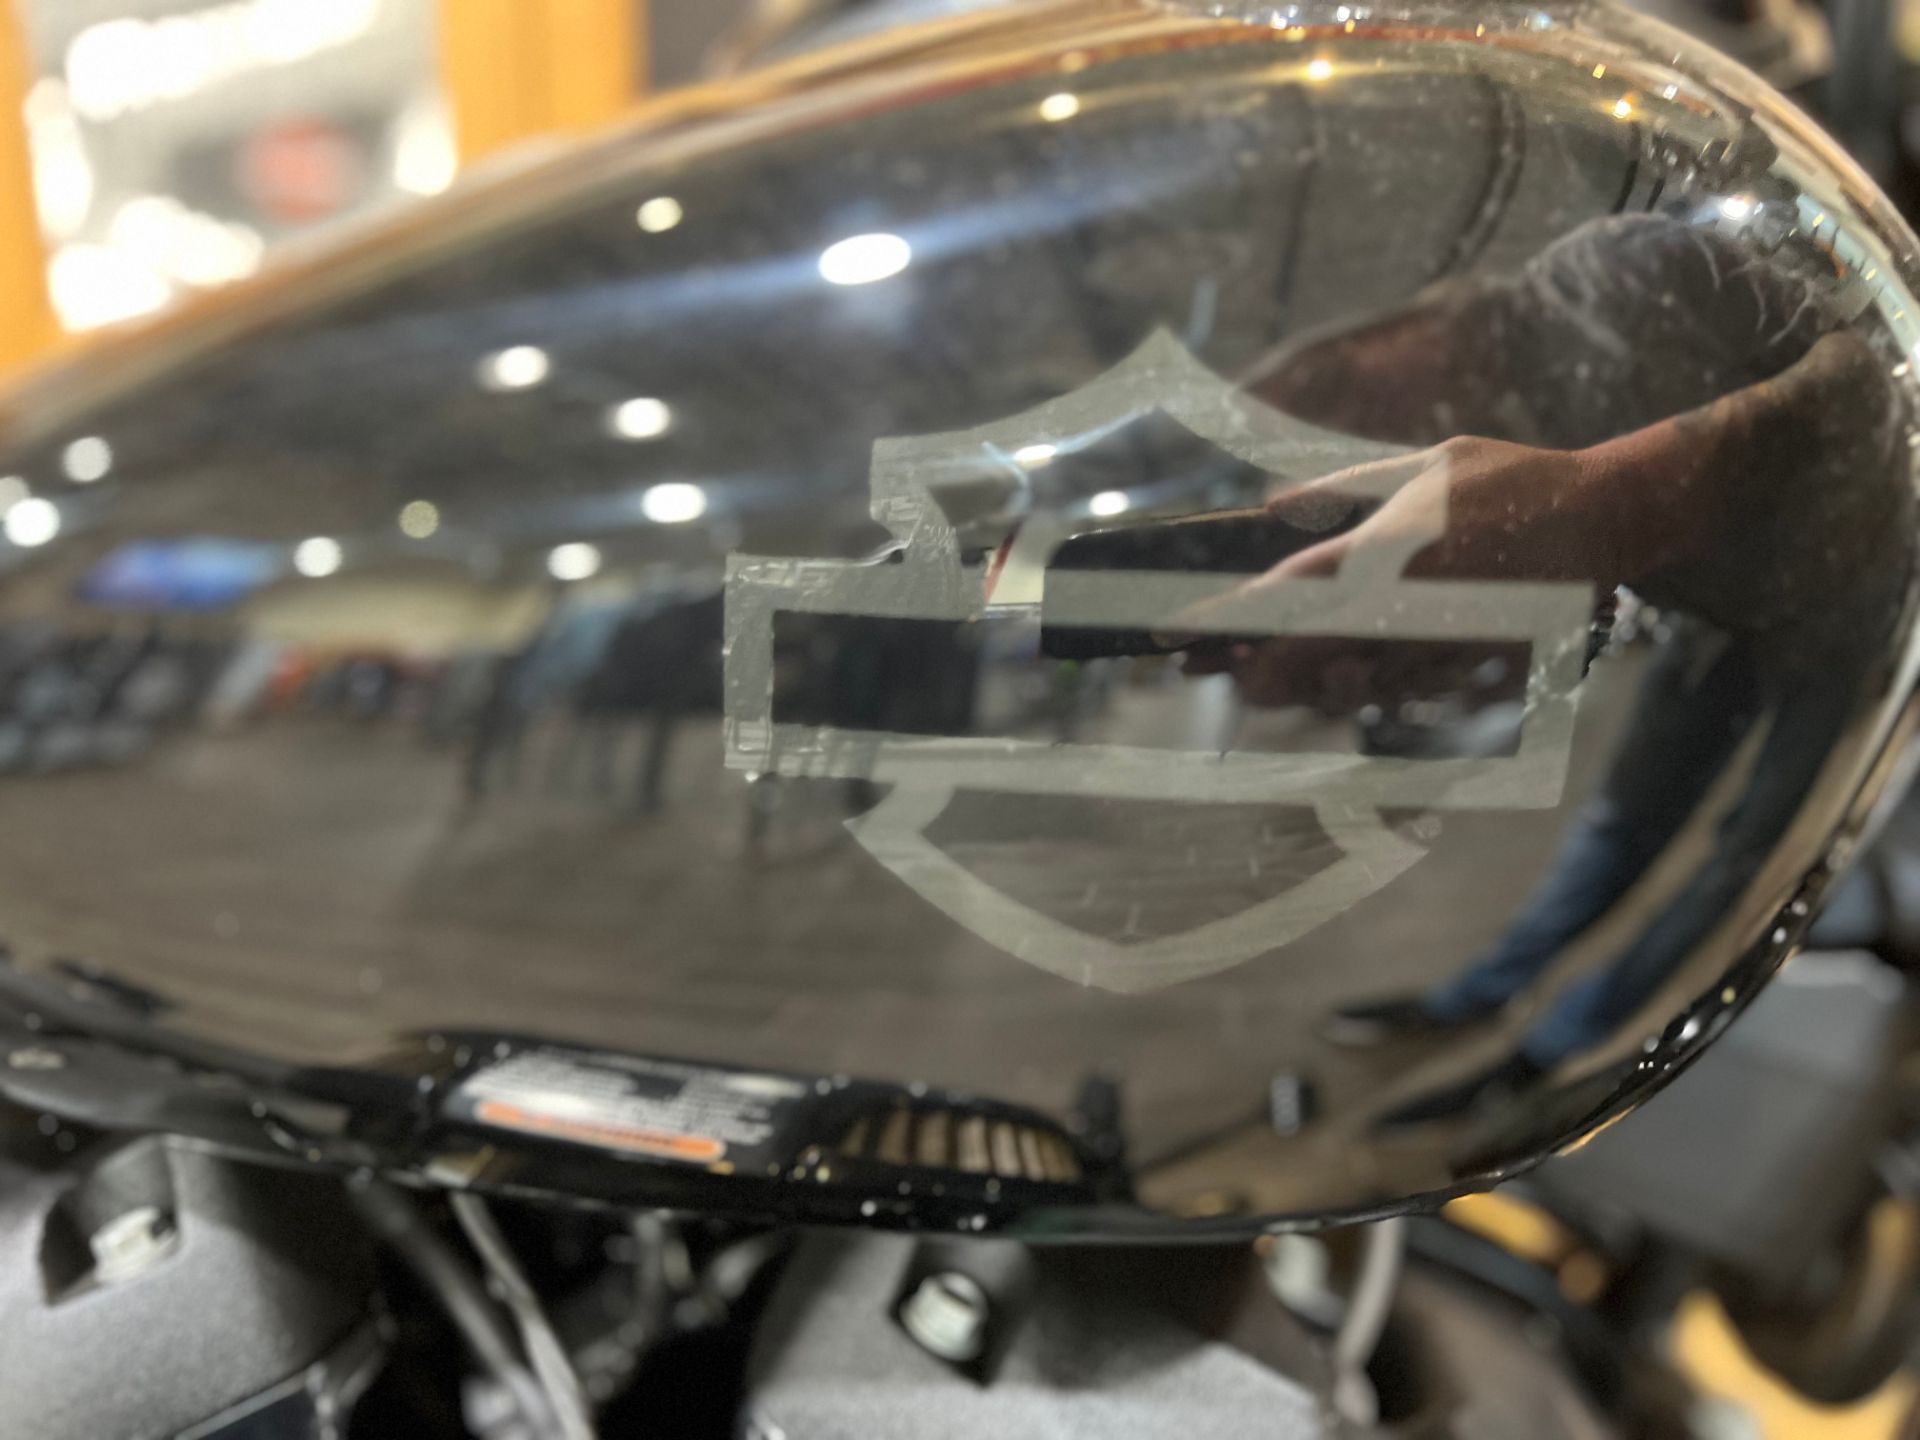 2018 Harley-Davidson Fat Bob® 114 in Logan, Utah - Photo 2